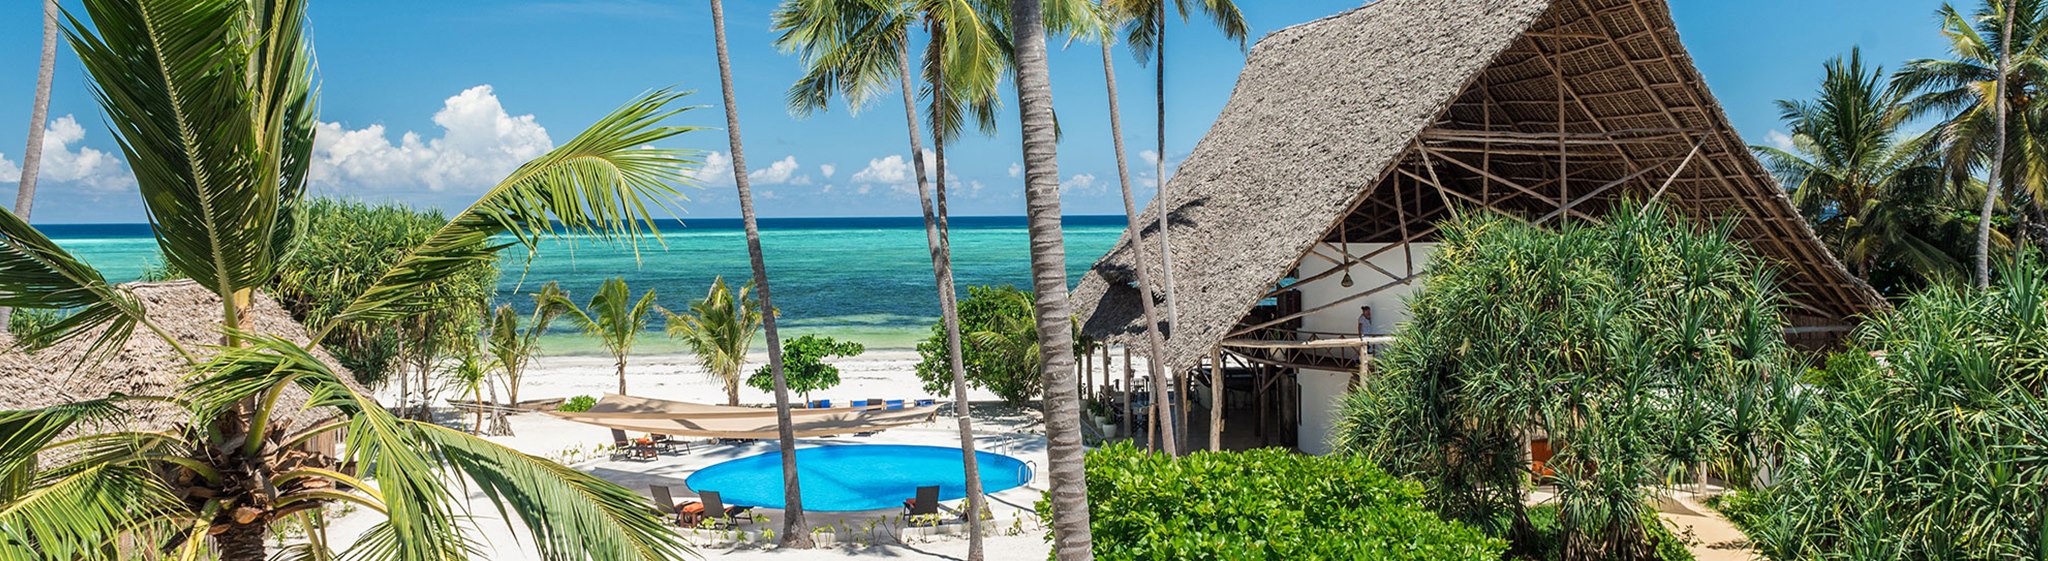 Zanzibar Beach Leisure - Safanta Tours & Travel Company Limited